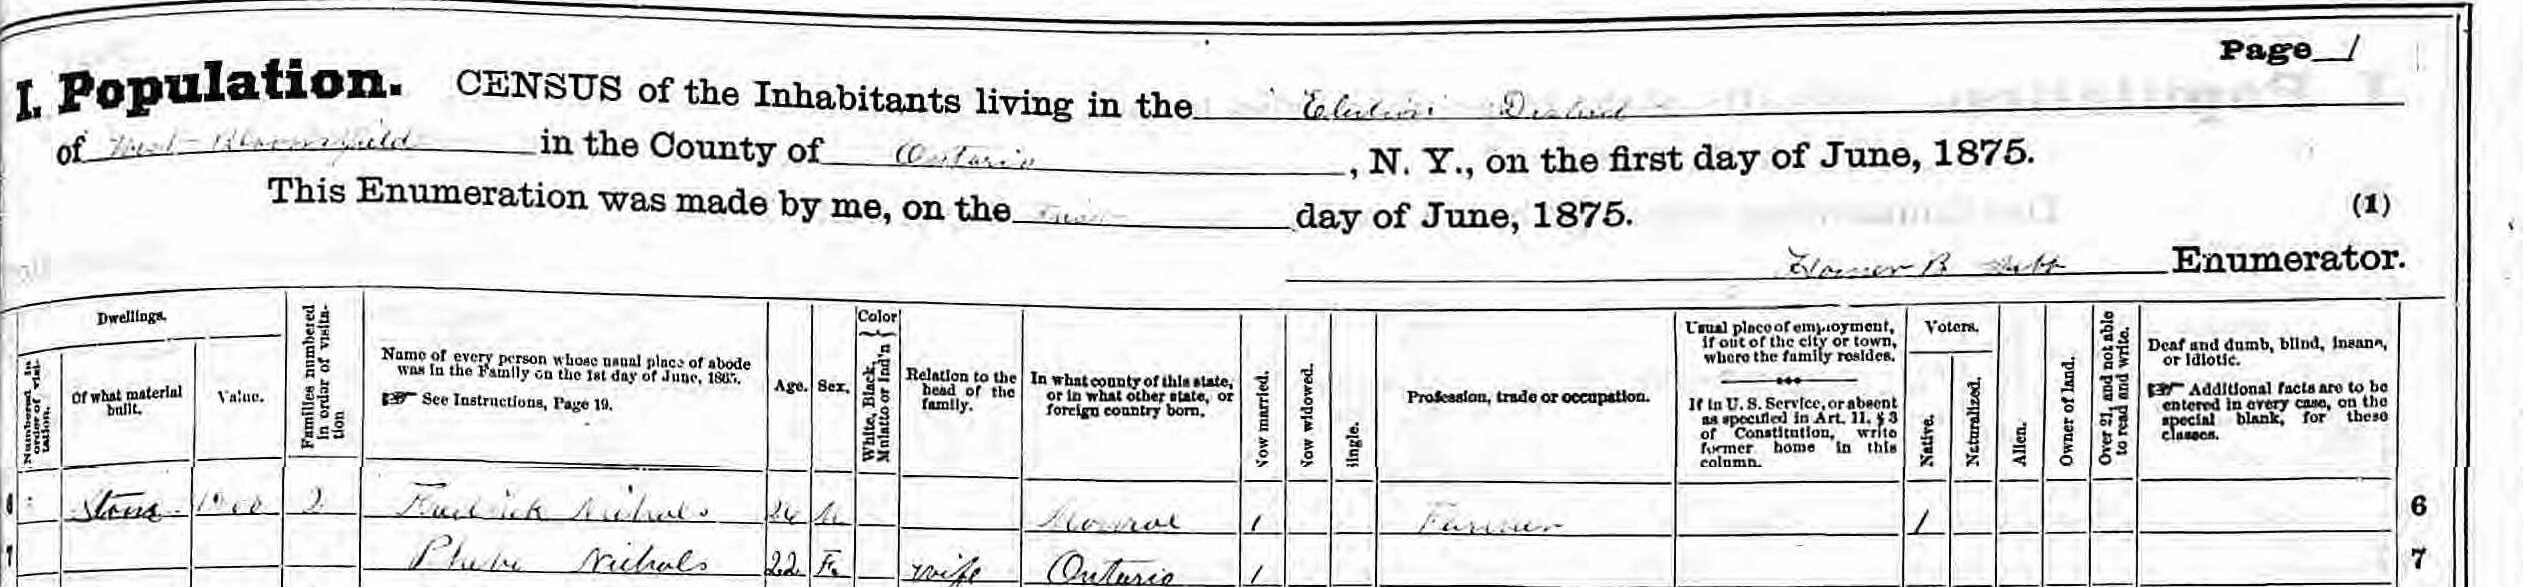 1875 NY Census for Frederick & Phebe Nichols